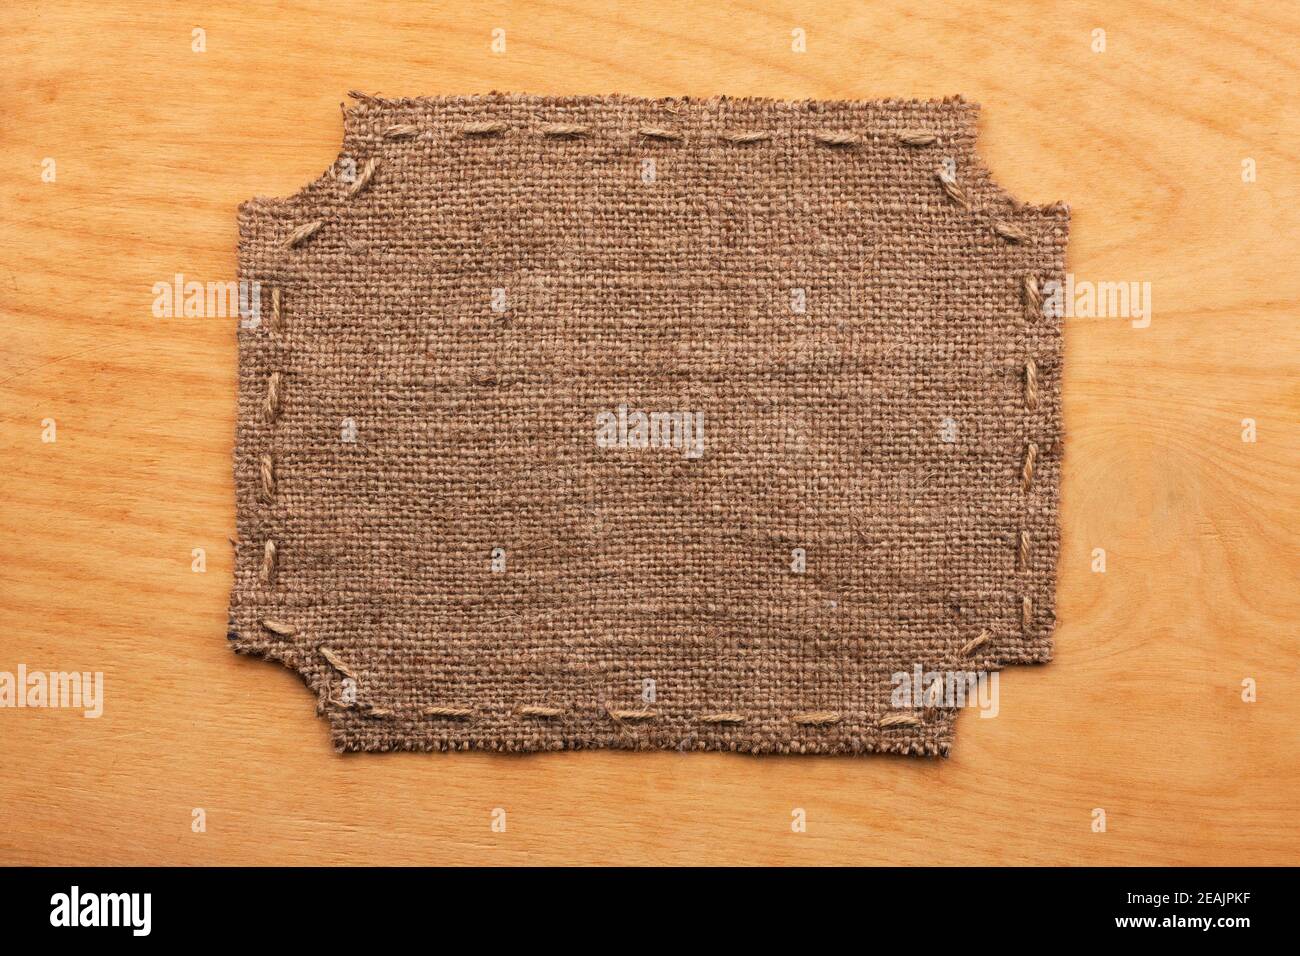 Marco de arpillera, se encuentra sobre un fondo de madera Foto de stock